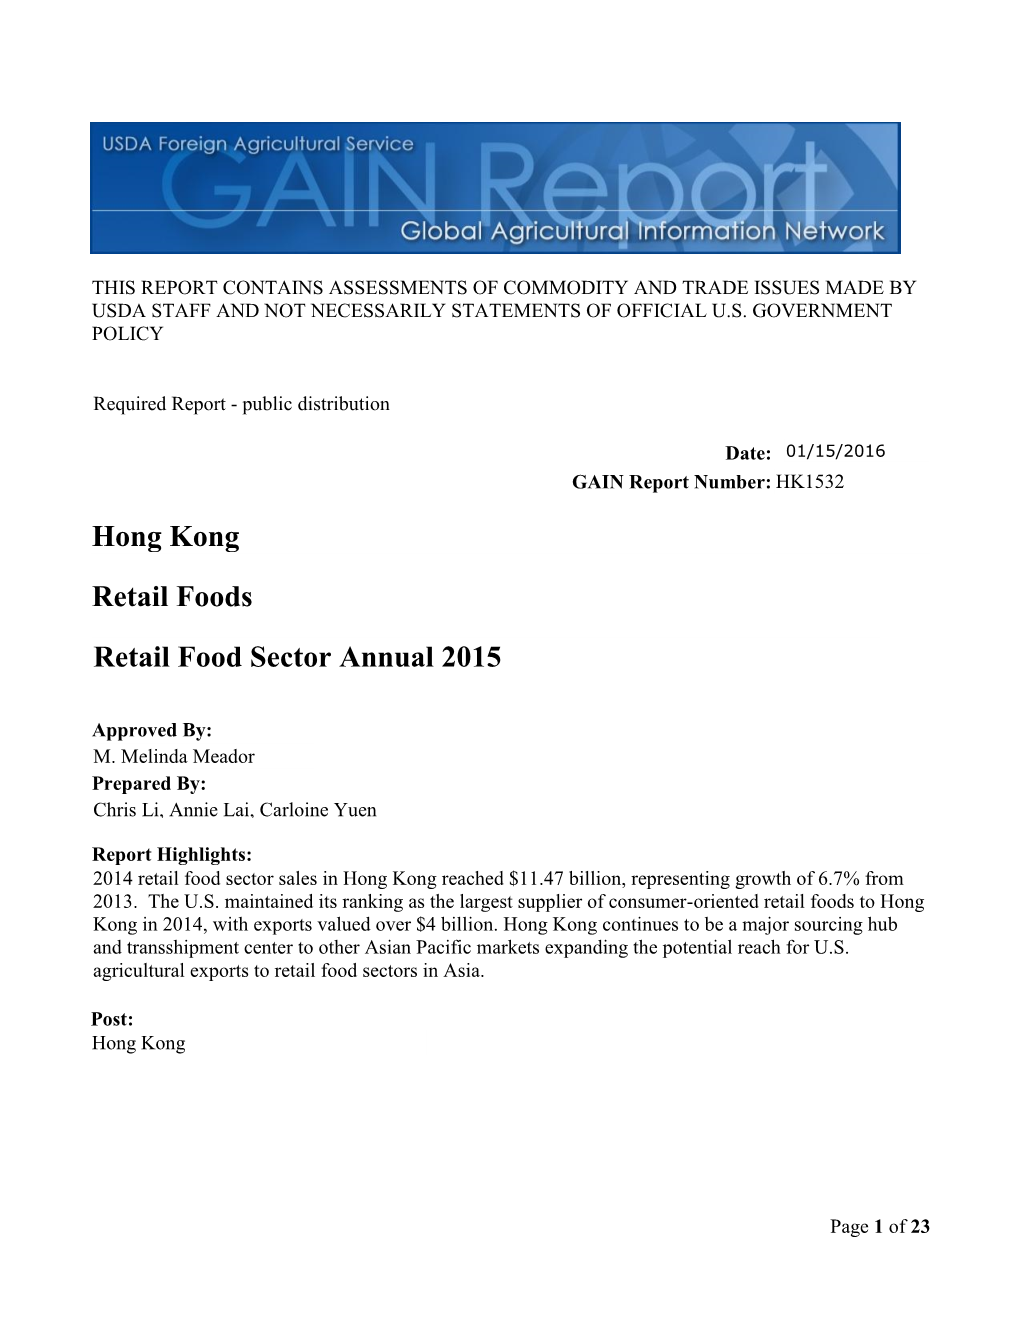 Retail Foods Hong Kong